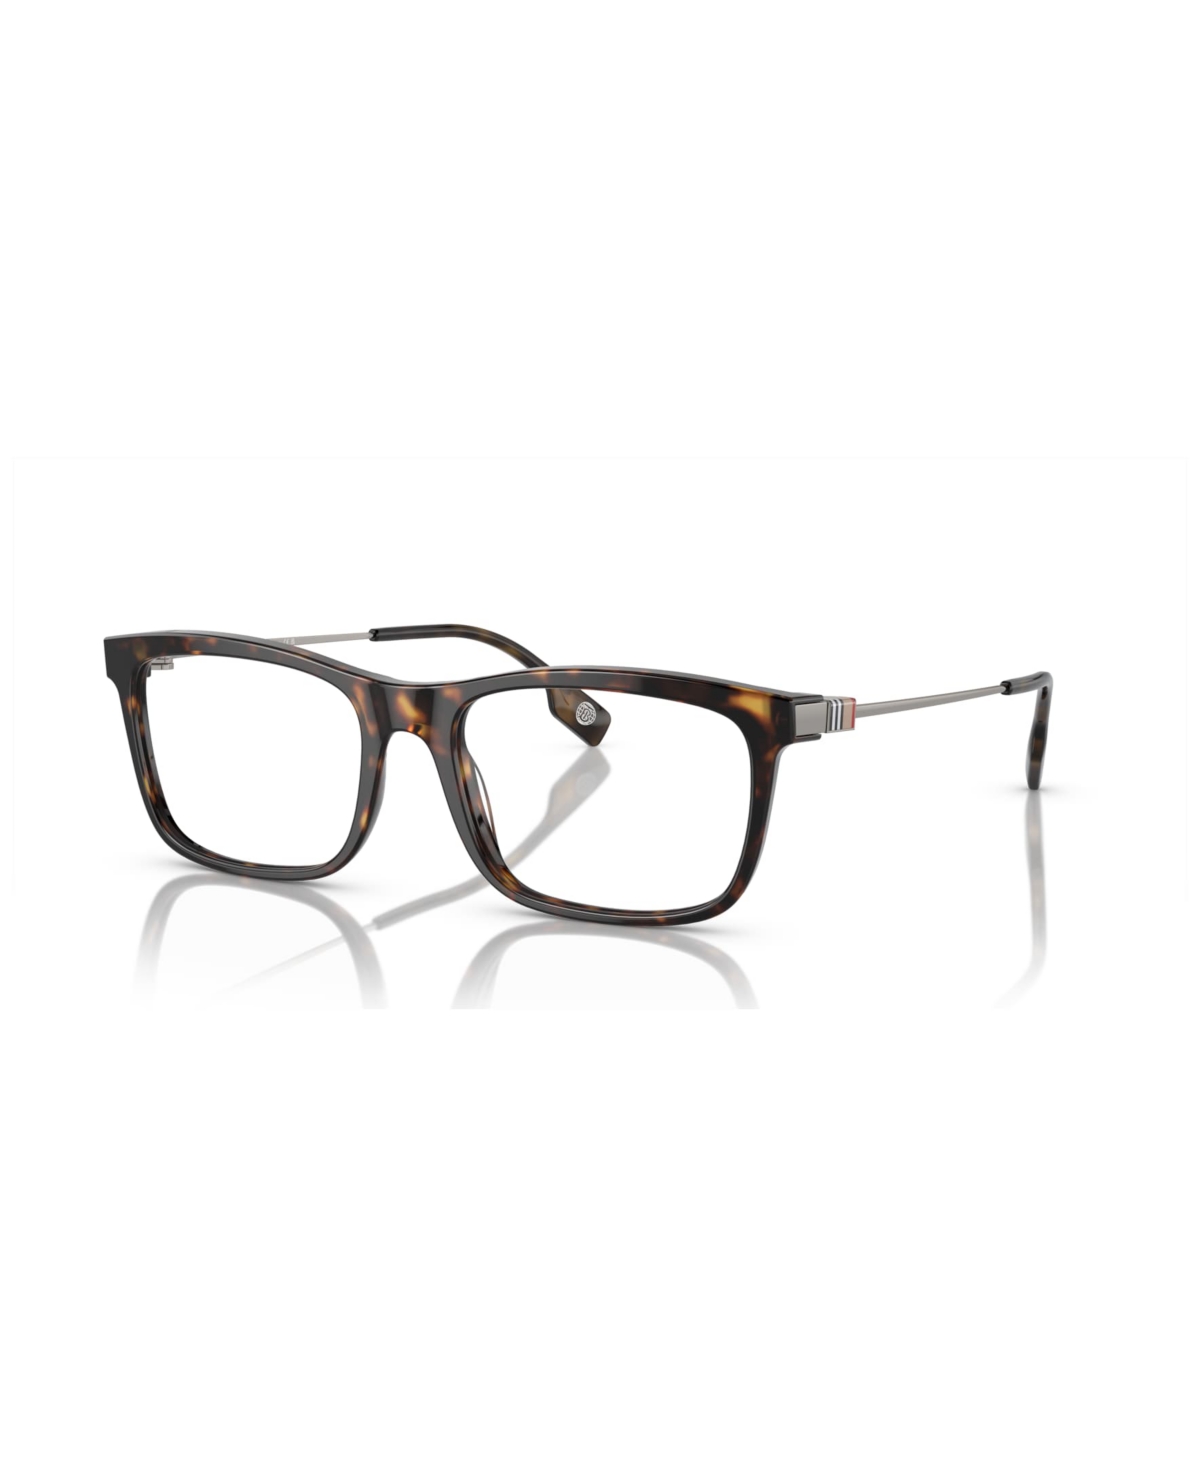 Men's Eyeglasses, BE2384 - Dark Havana